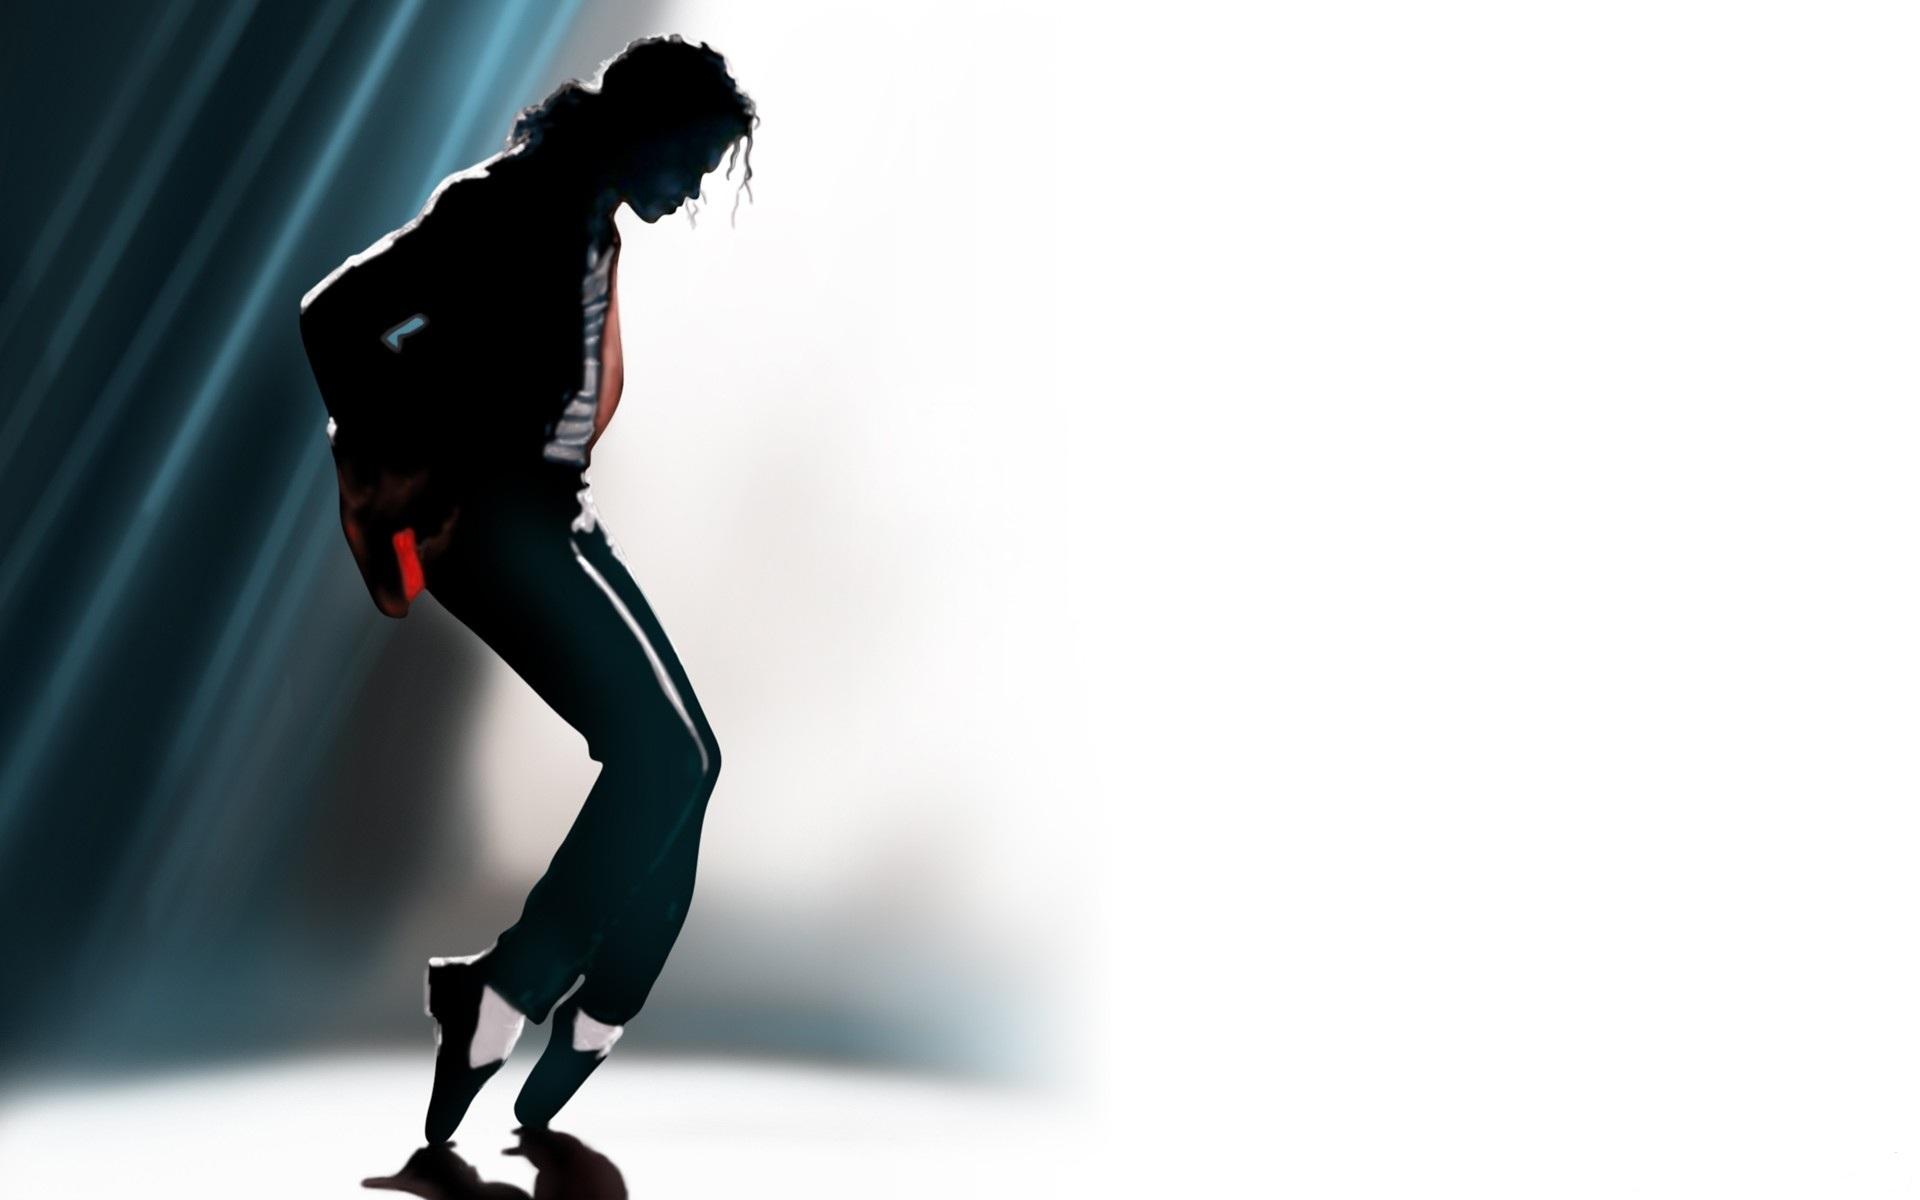 Data Geek Challenge: Michael Jackson - King Of Pop... - SAP Community